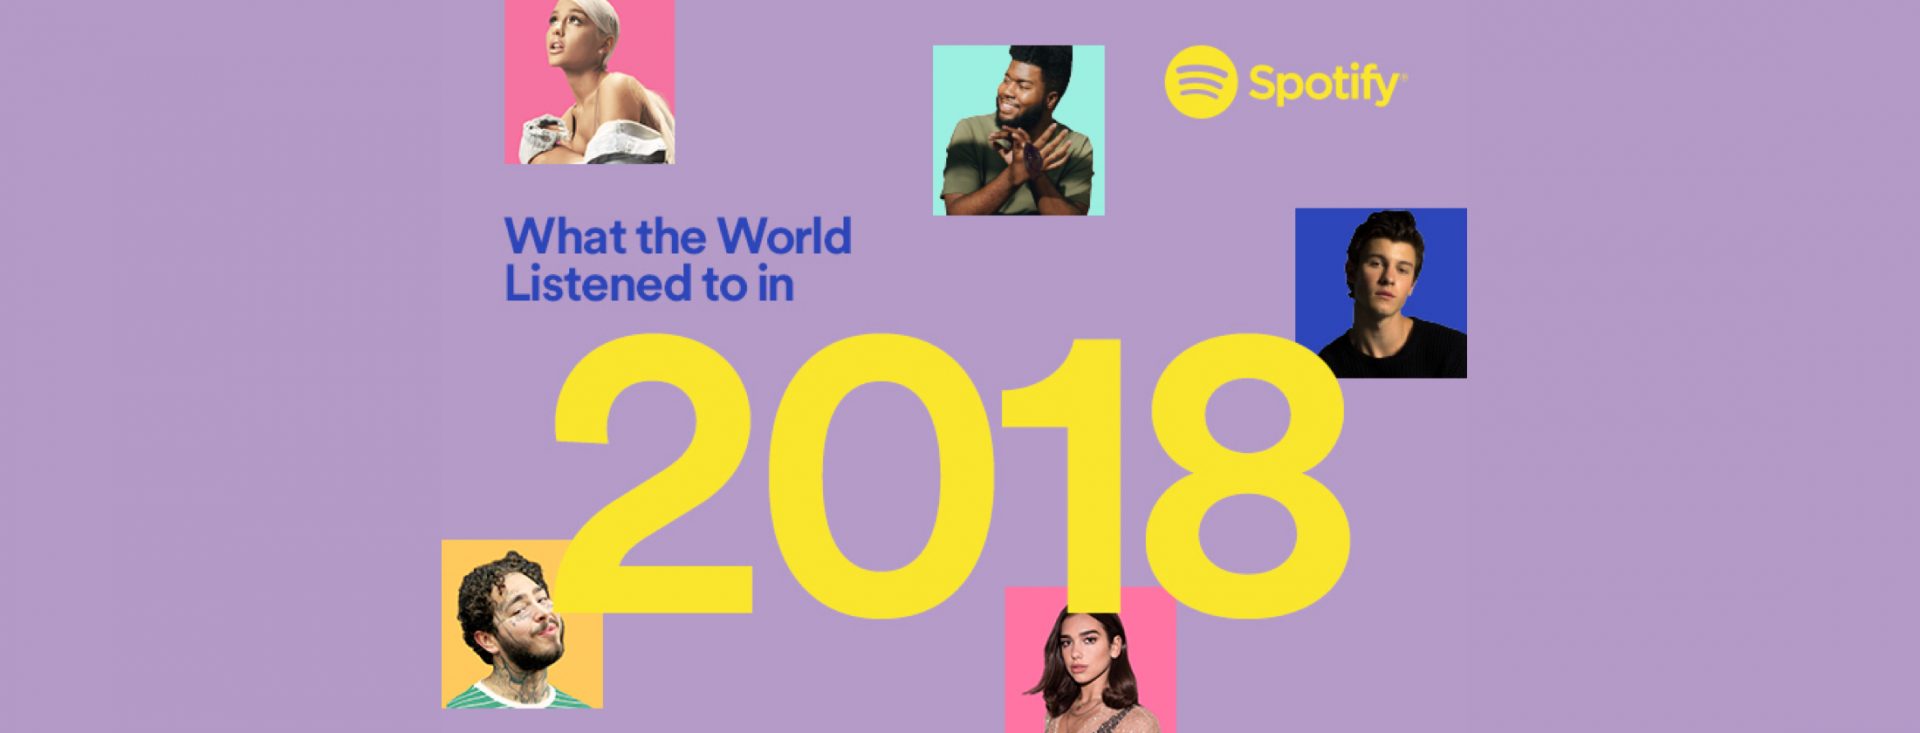 spotify spotify top artists 2018